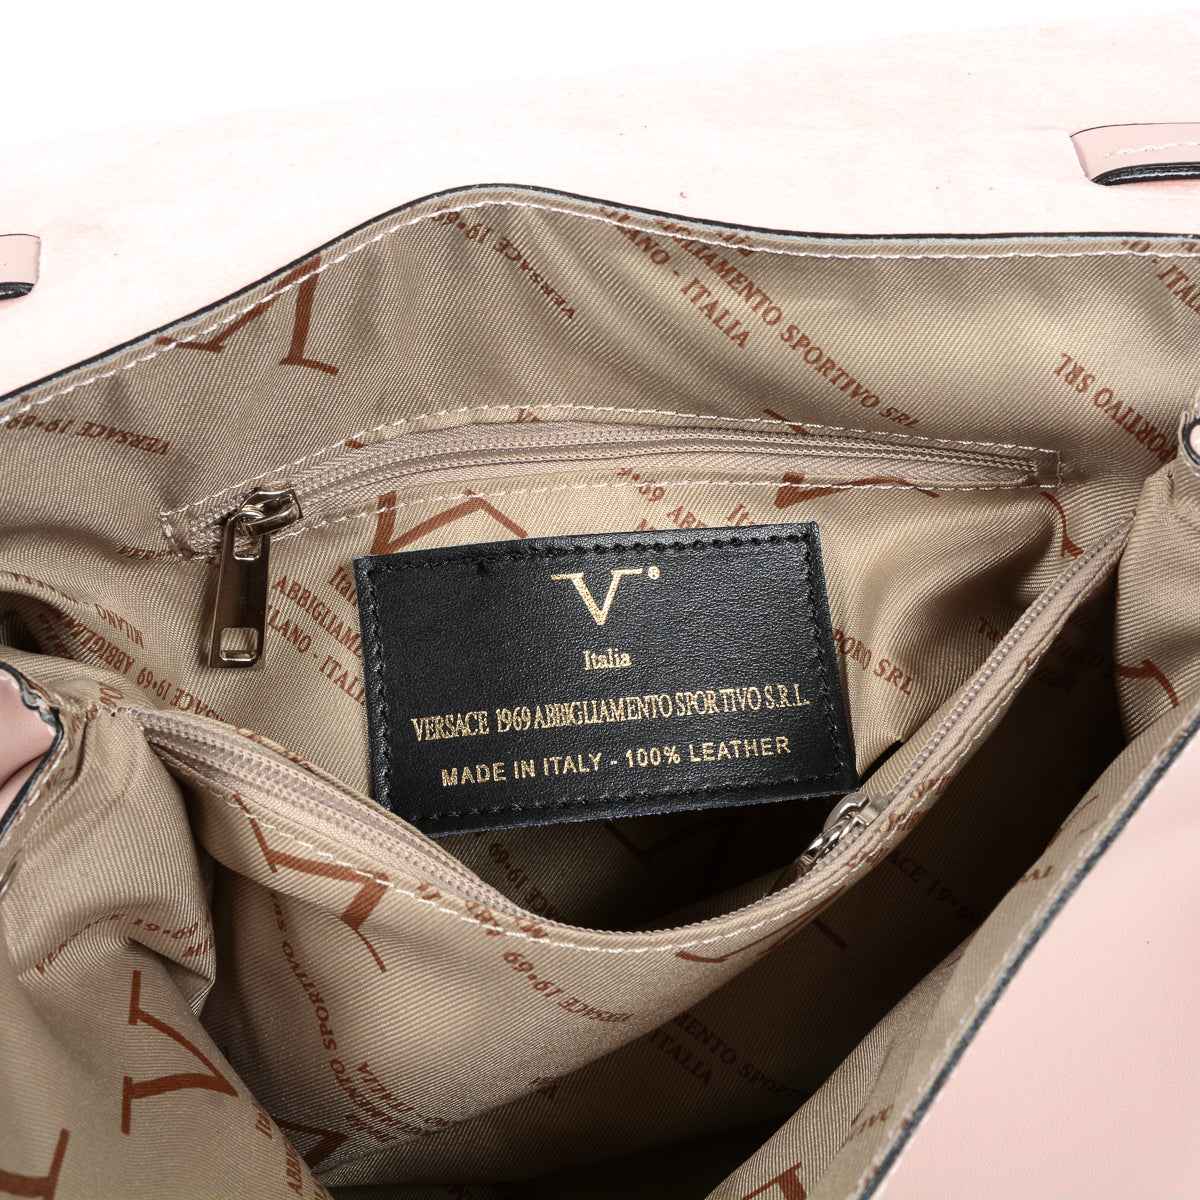 Vintage Versace 1969 Italia Abbigliamento Sportivo SRL bag